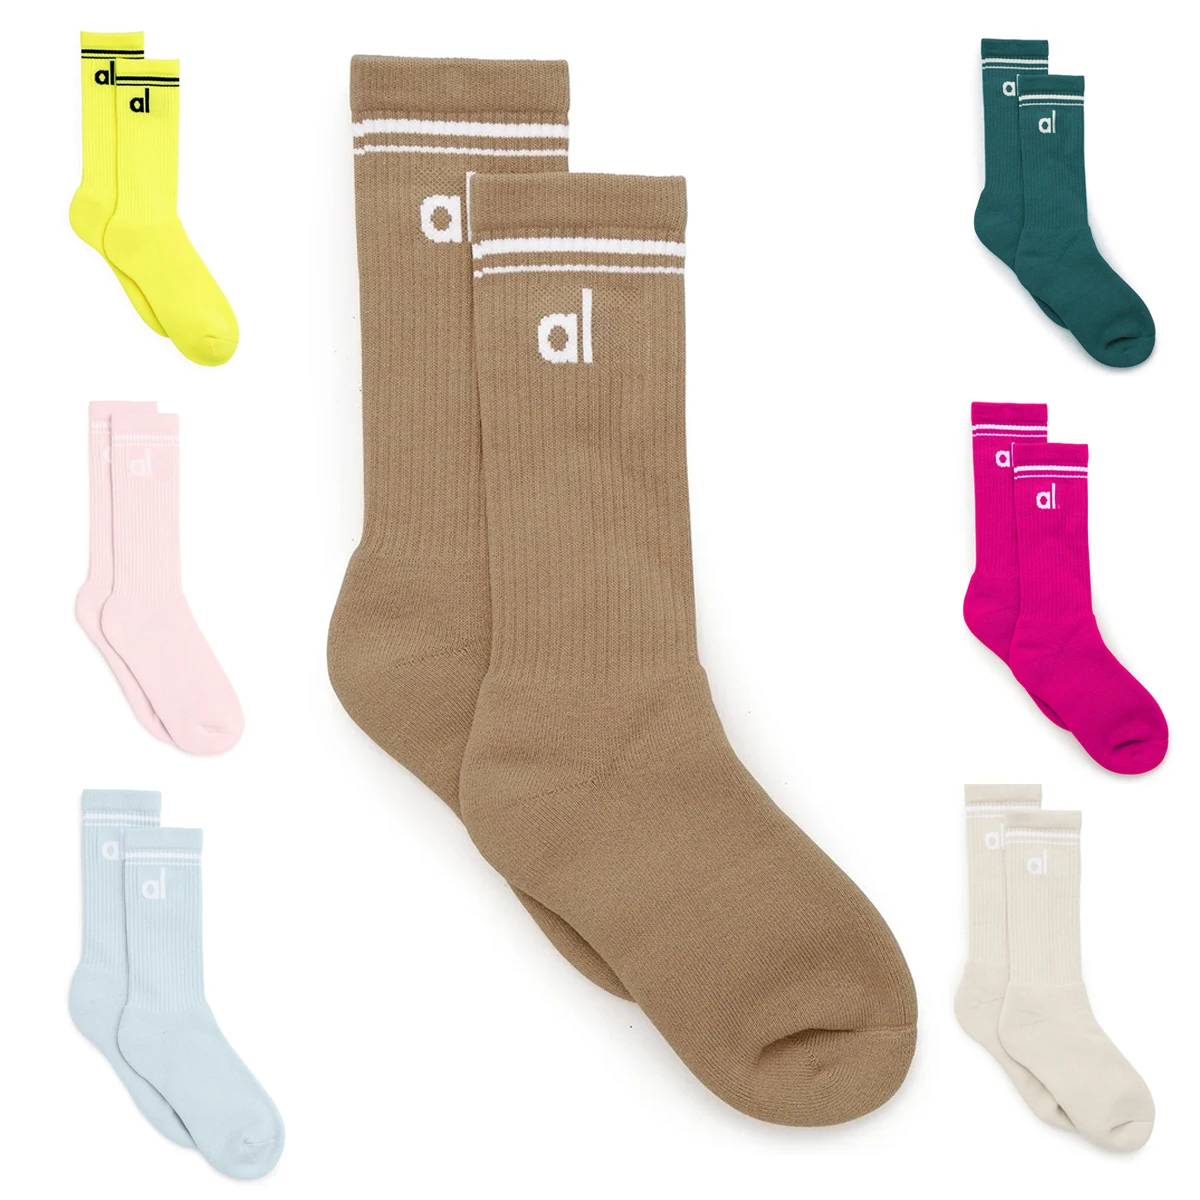 

AL Yoga Cotton Socks 18cm High Stockings Sports Leisure Socks Couple Style Sports Gym Stockings Unisex Soft Comfort Four Seasons